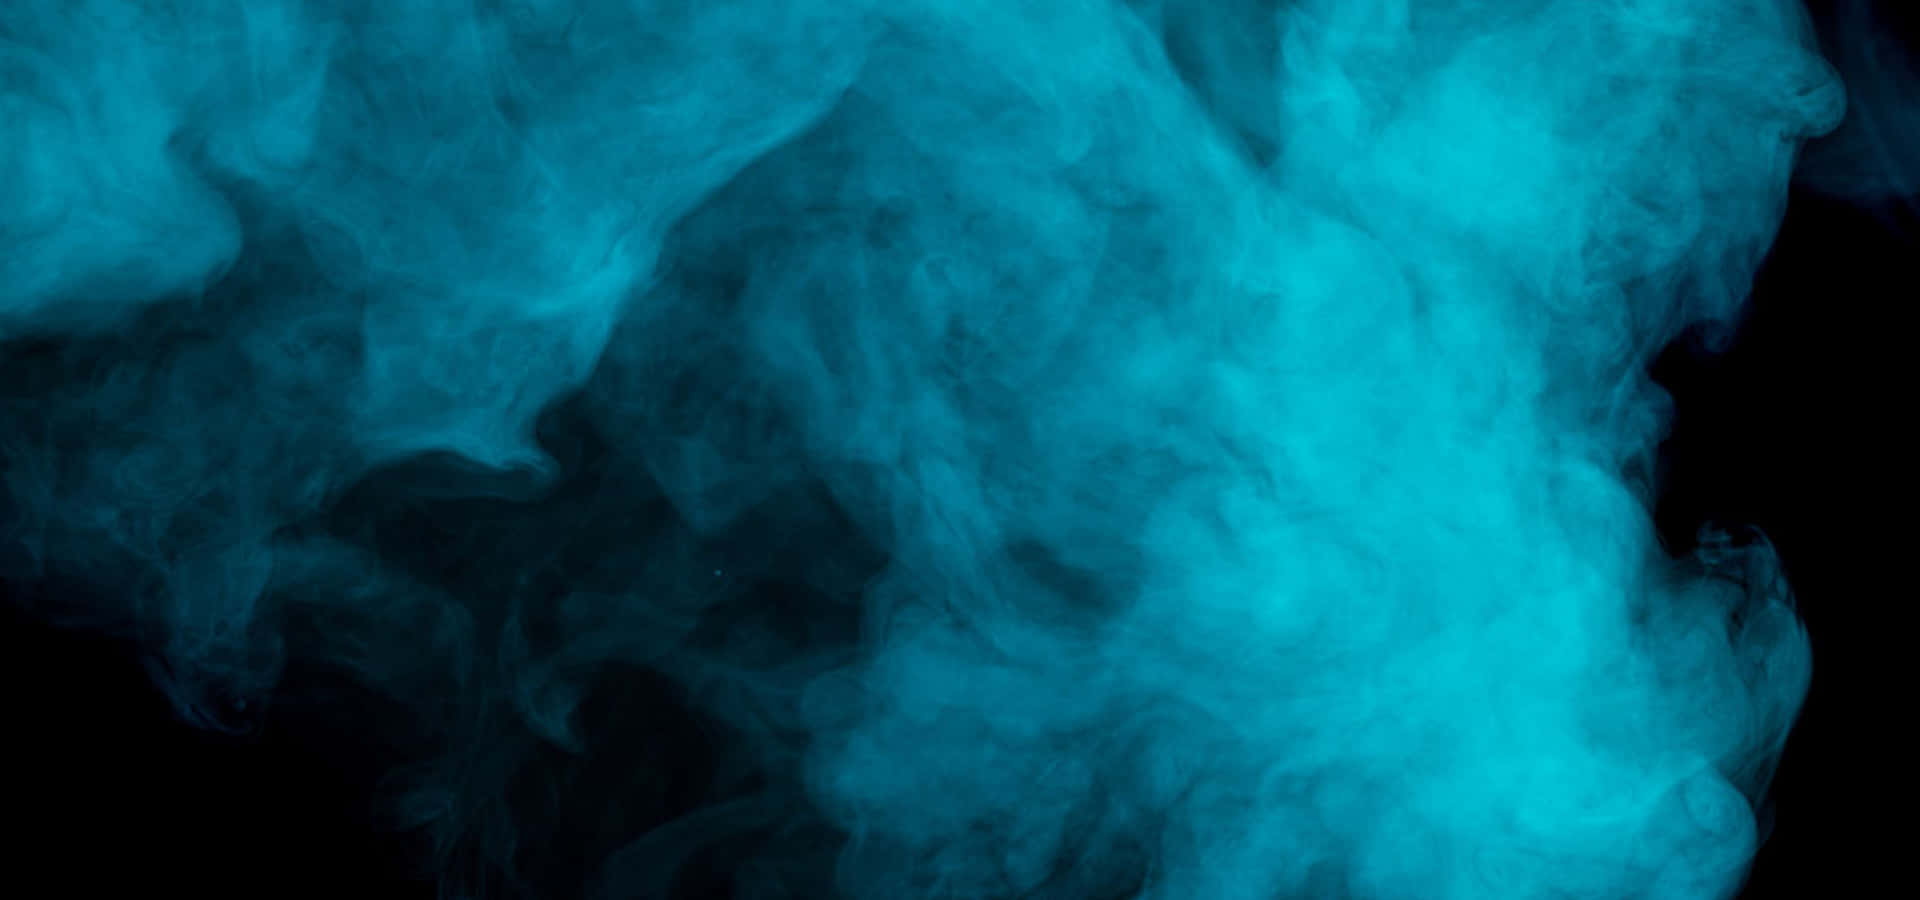 Get lost in the mesmerizing swirl of Smoke Blue. Wallpaper